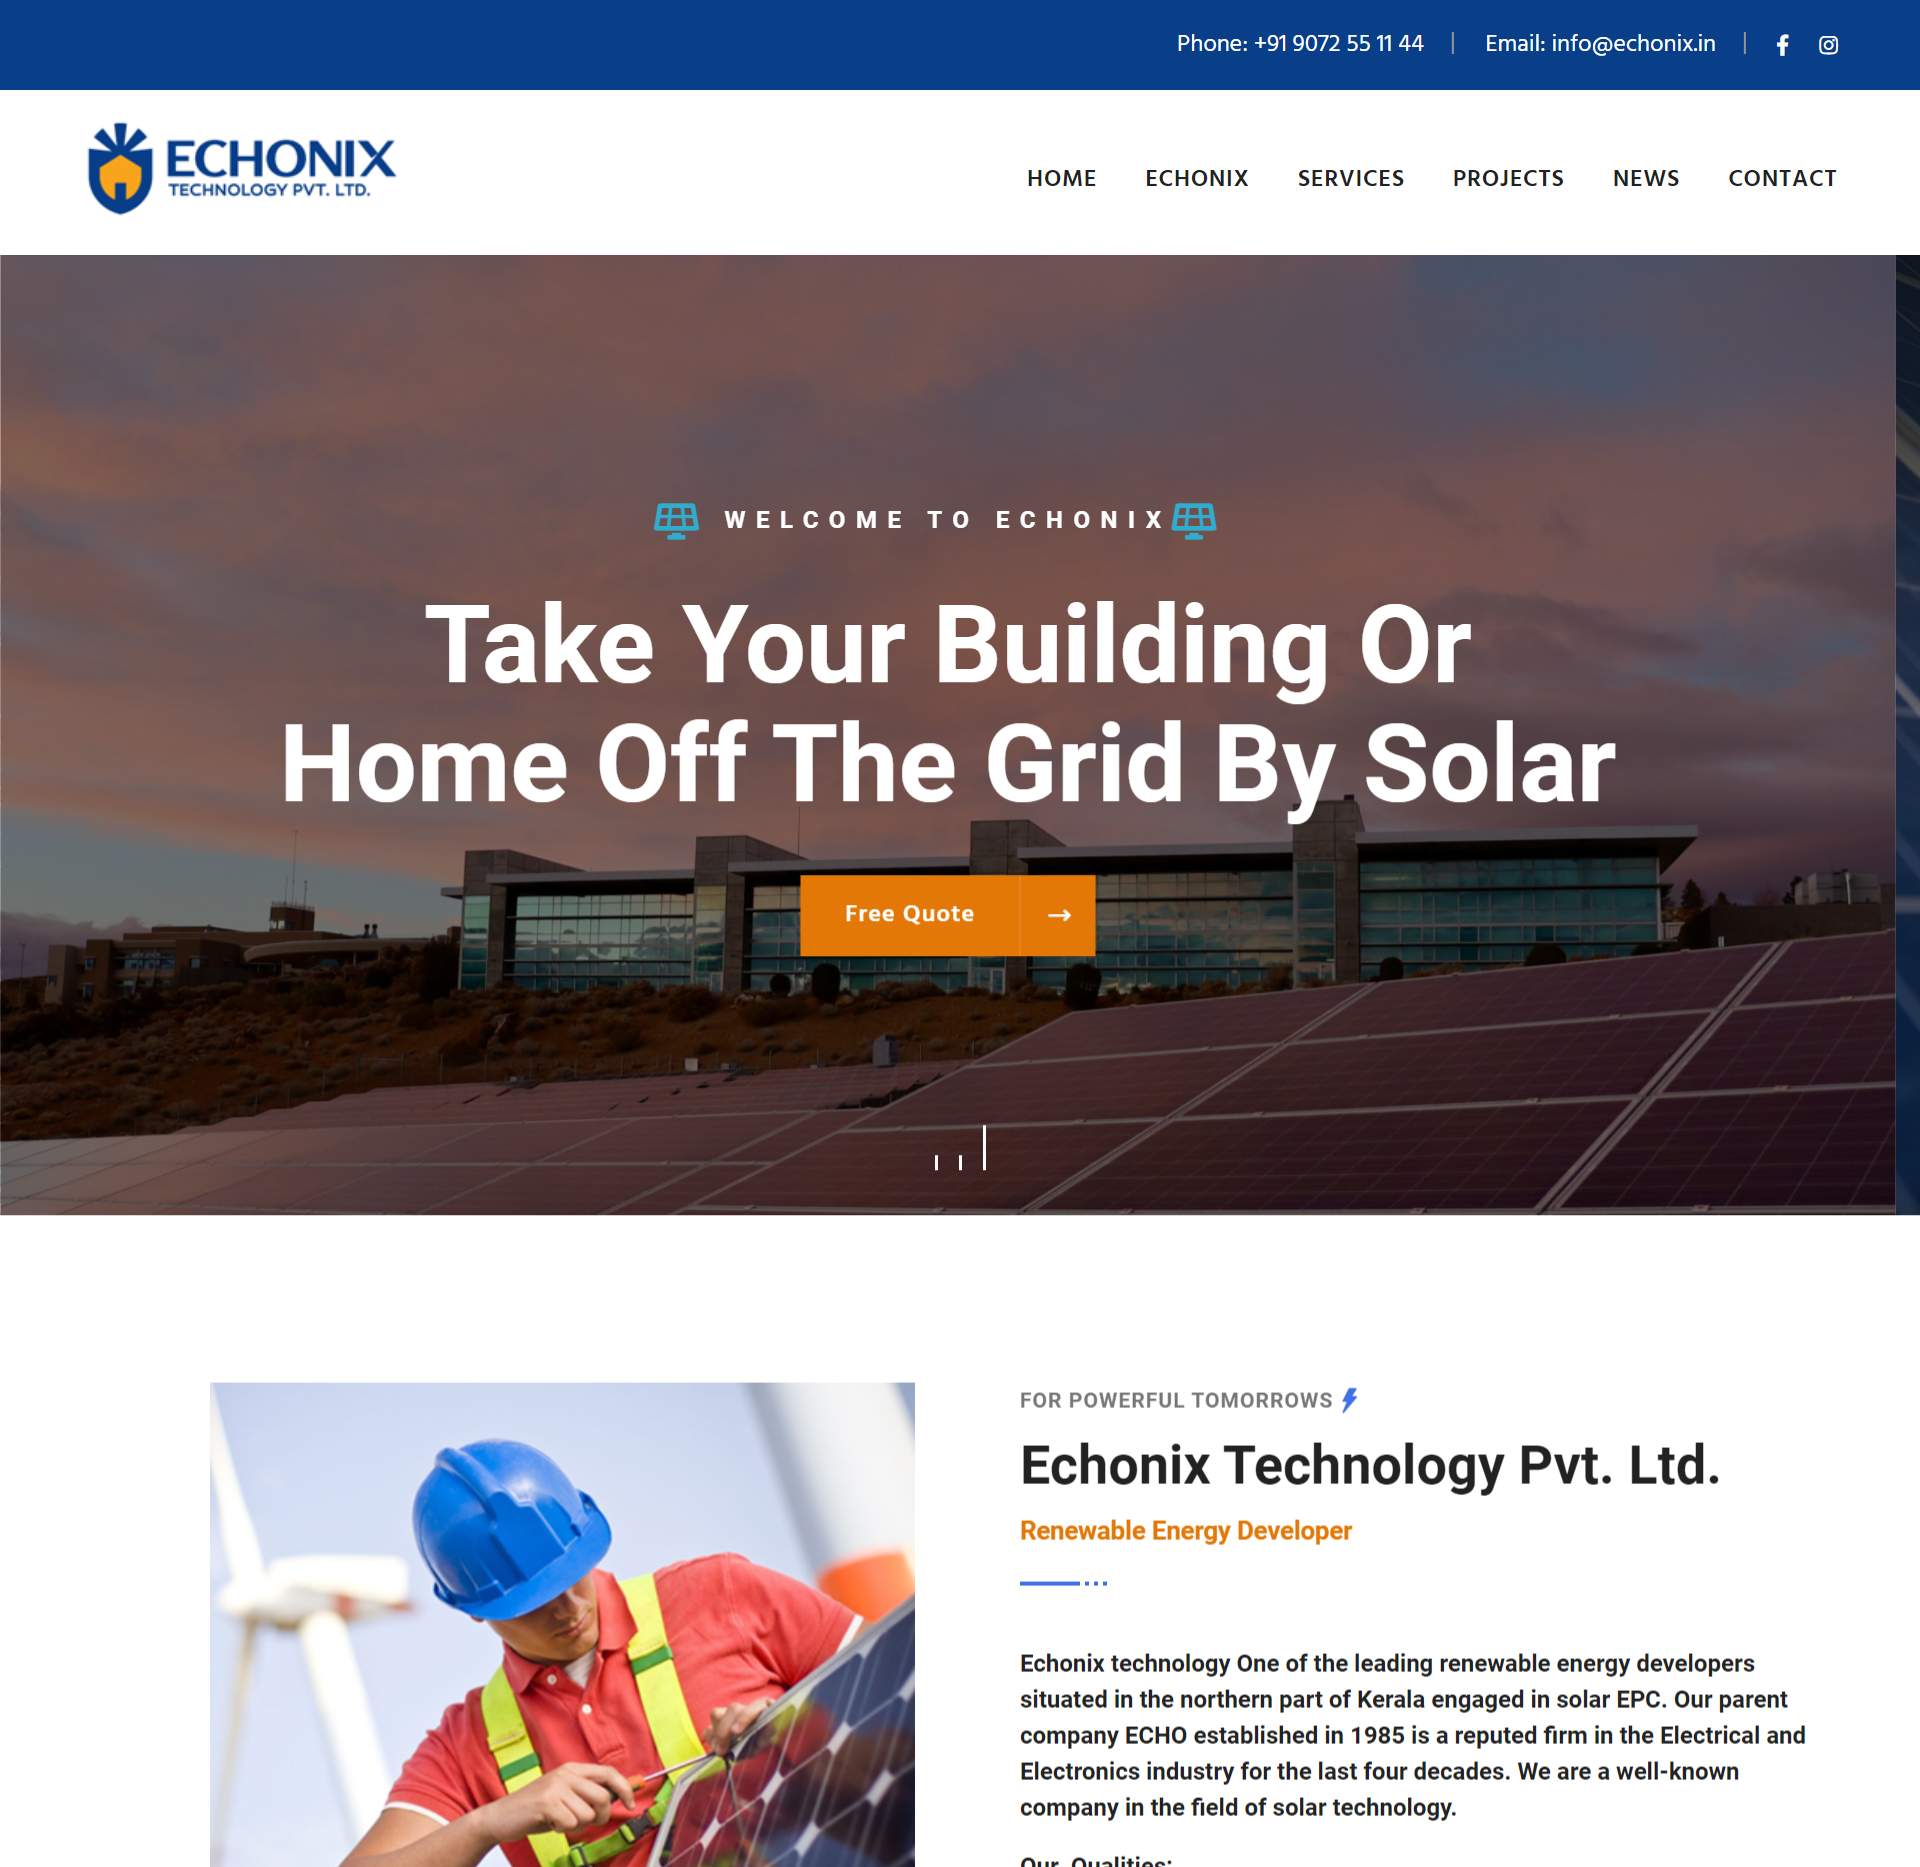 Echonix Technology Pvt. Ltd.